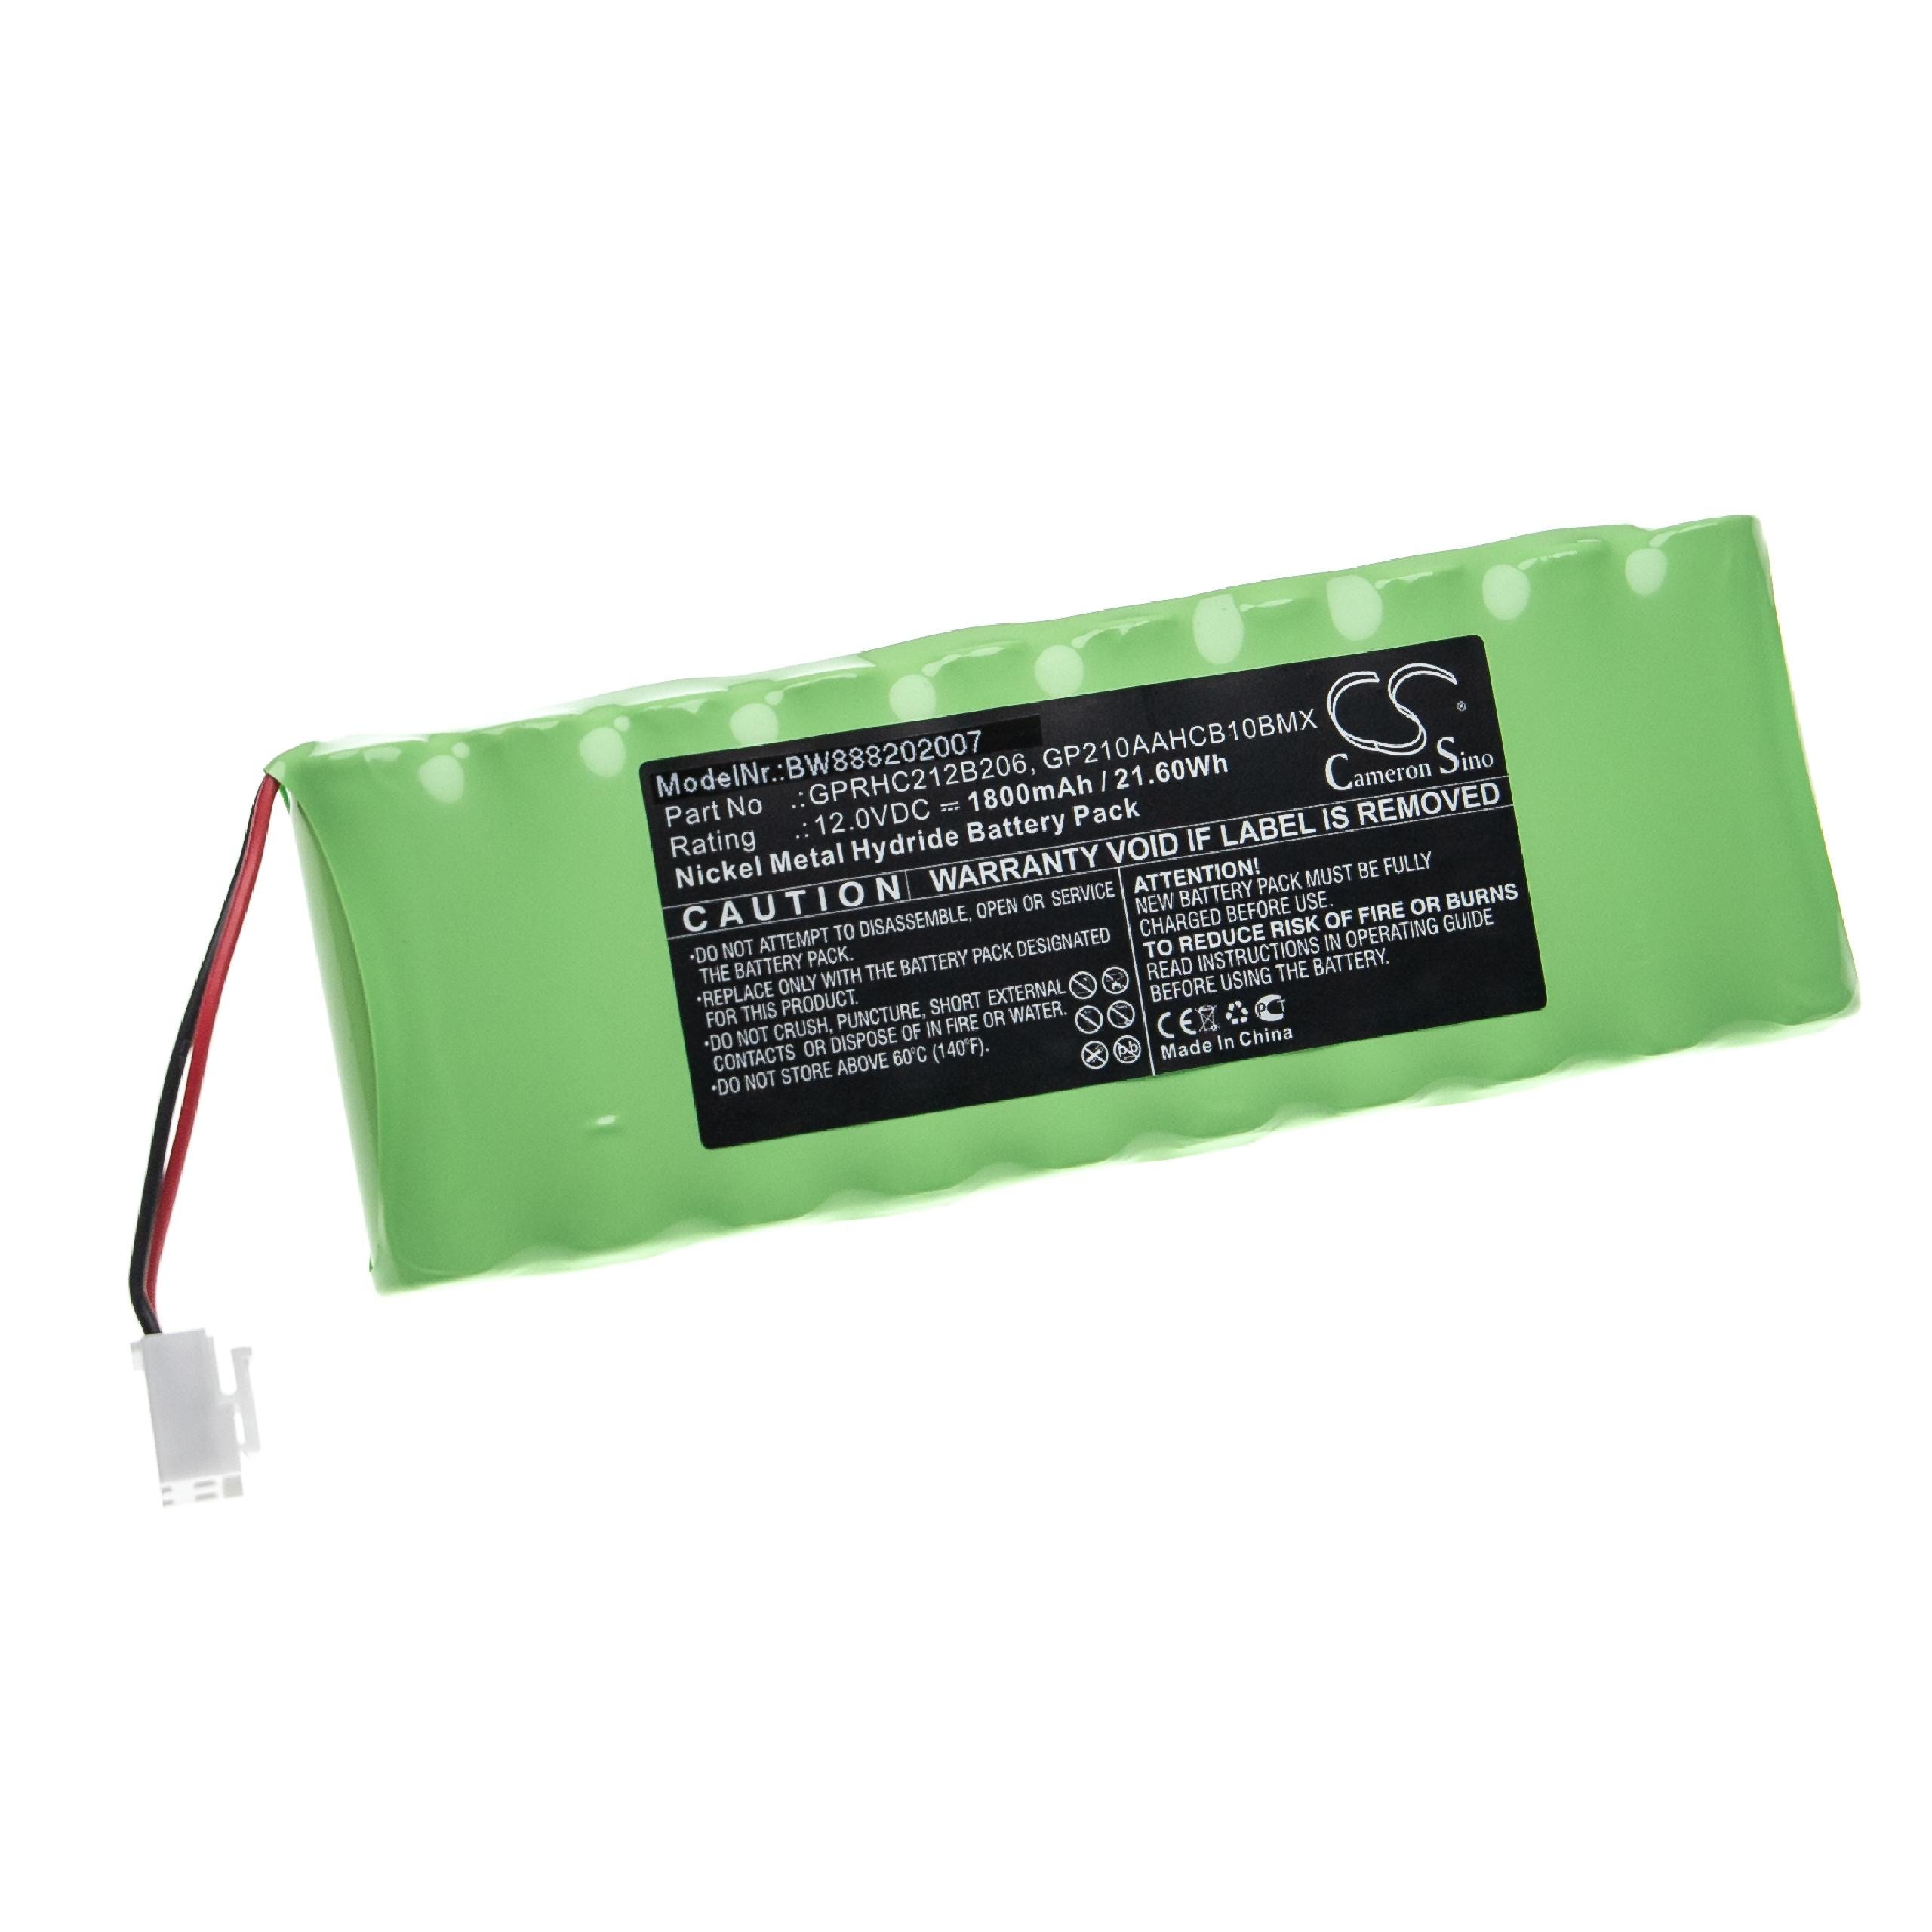 Batterie rechargeable 12V 1800 mAh